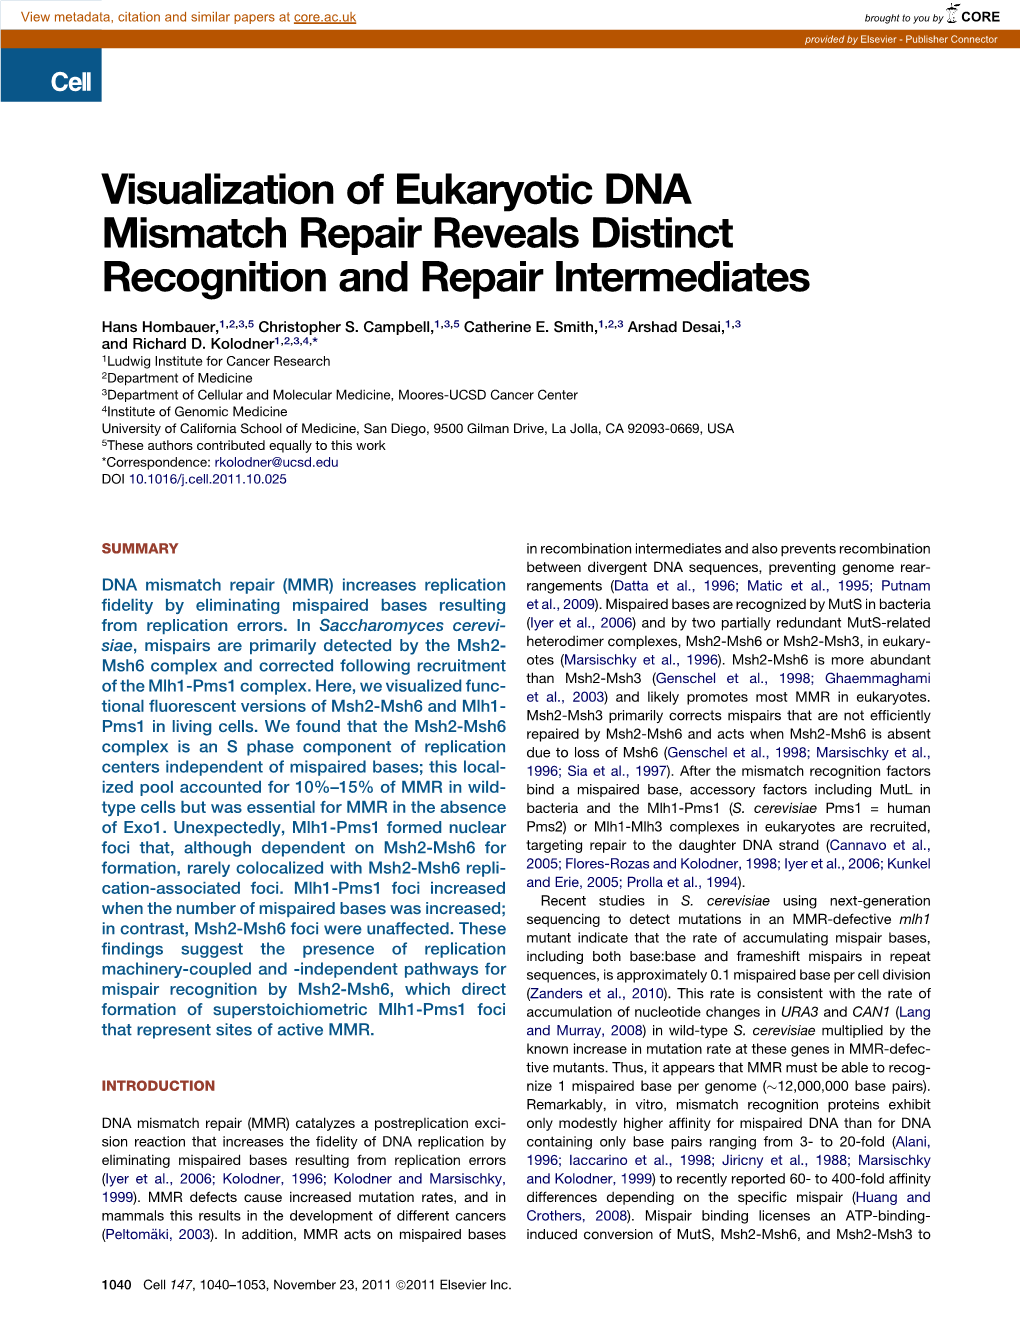 Visualization of Eukaryotic DNA Mismatch Repair Reveals Distinct Recognition and Repair Intermediates